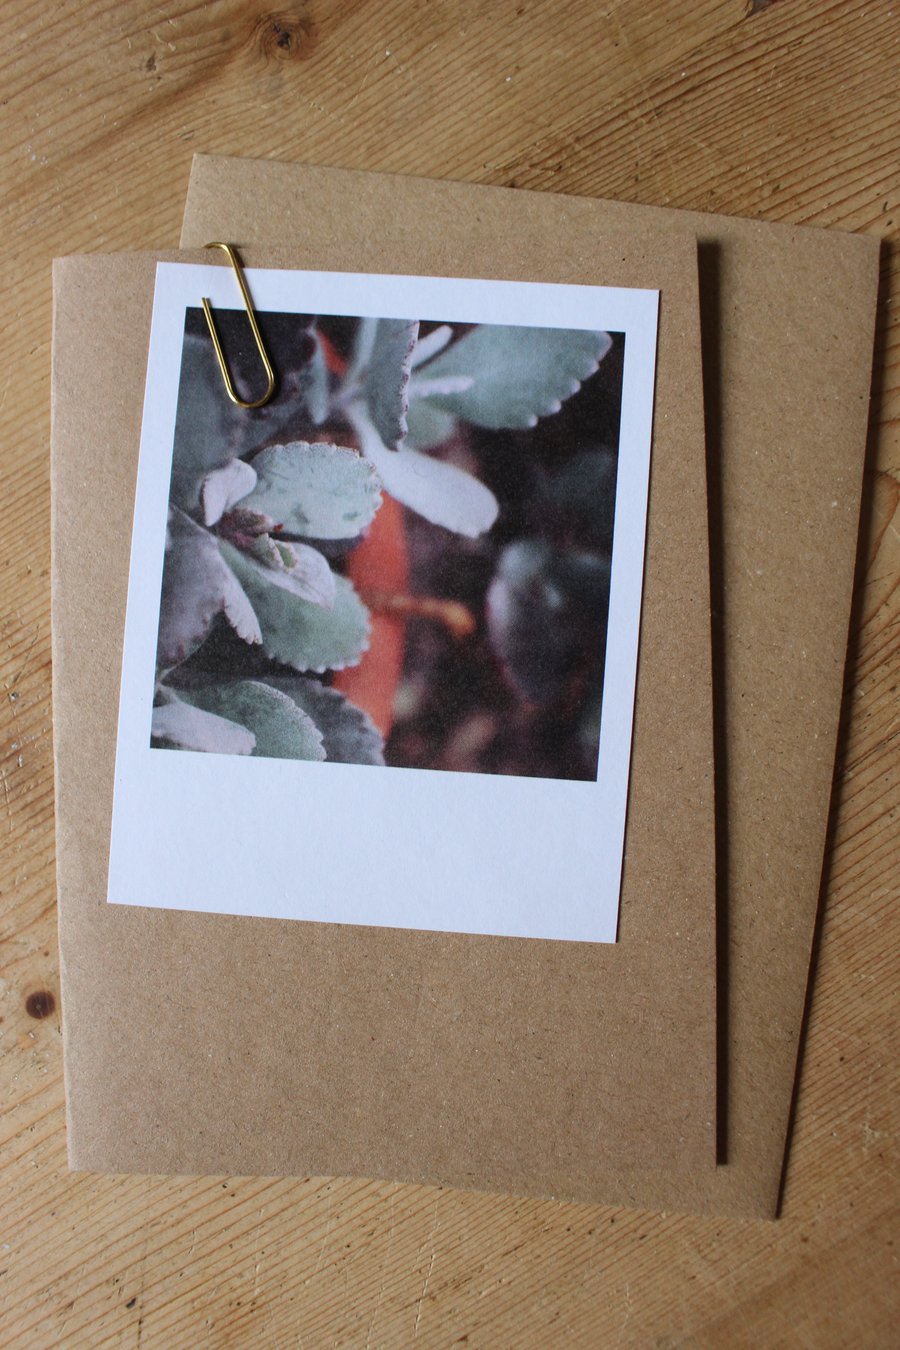 “Polaroid” style photo card: Plants